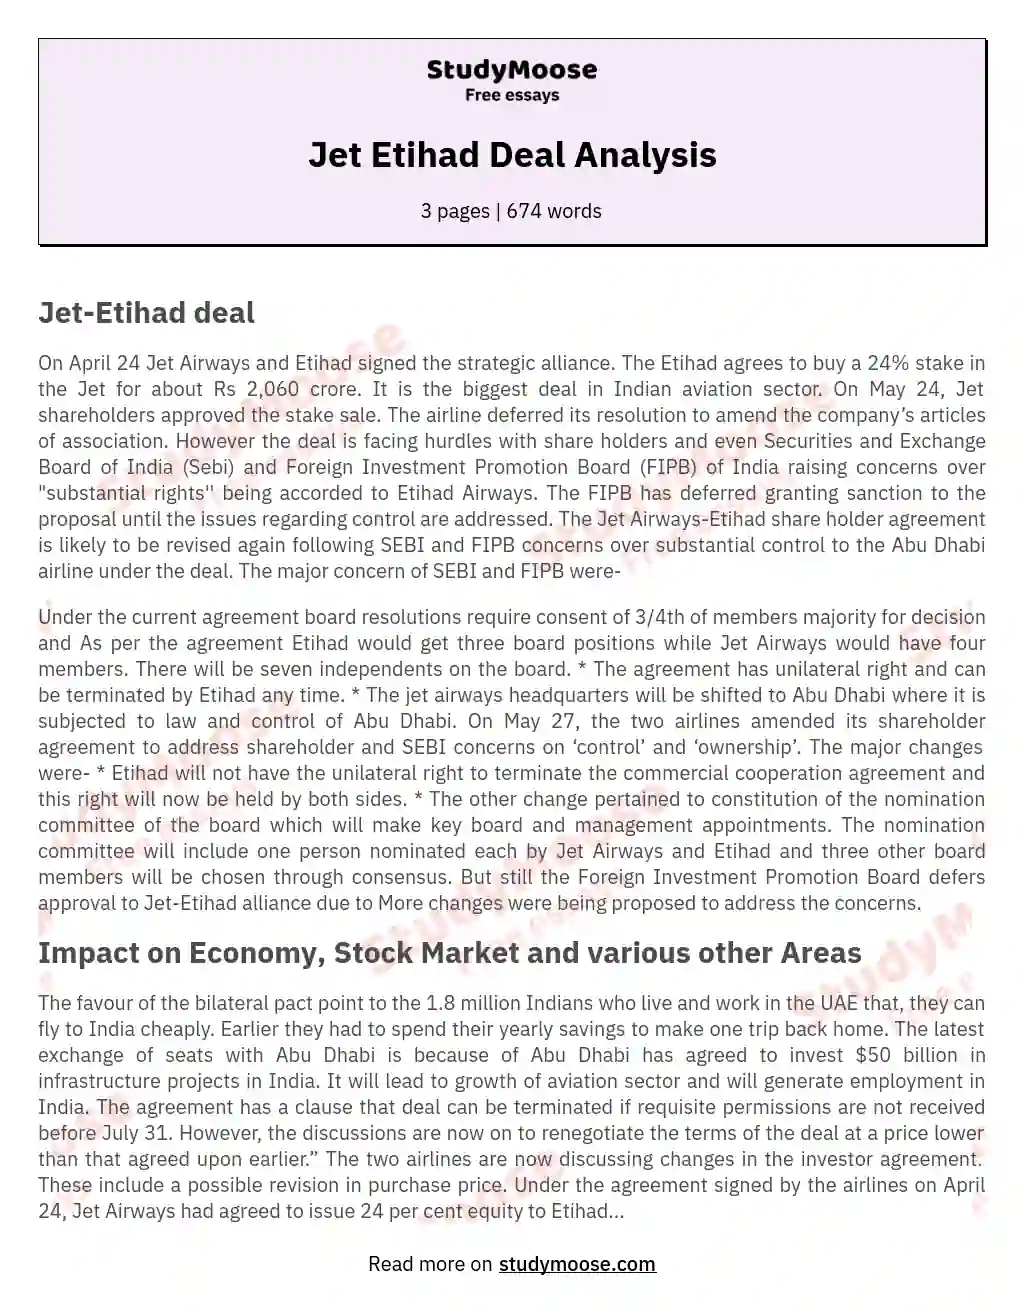 Jet Etihad Deal Analysis essay